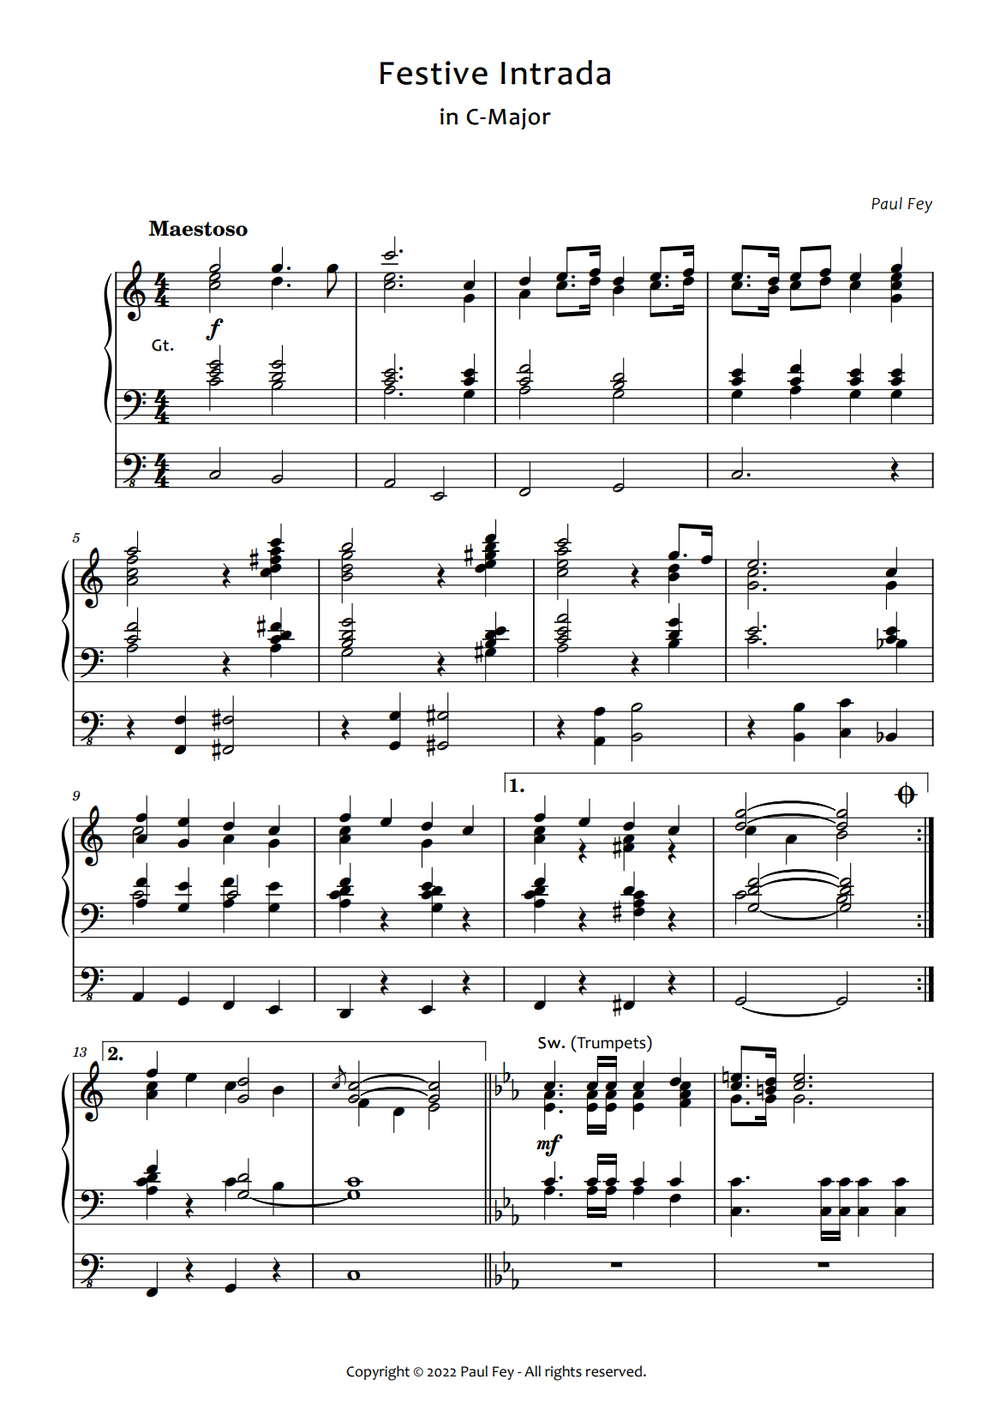 Festive Intrada" in C-Major for Organ (Sheet Music) - Music for Pipe Organ by Paul Fey